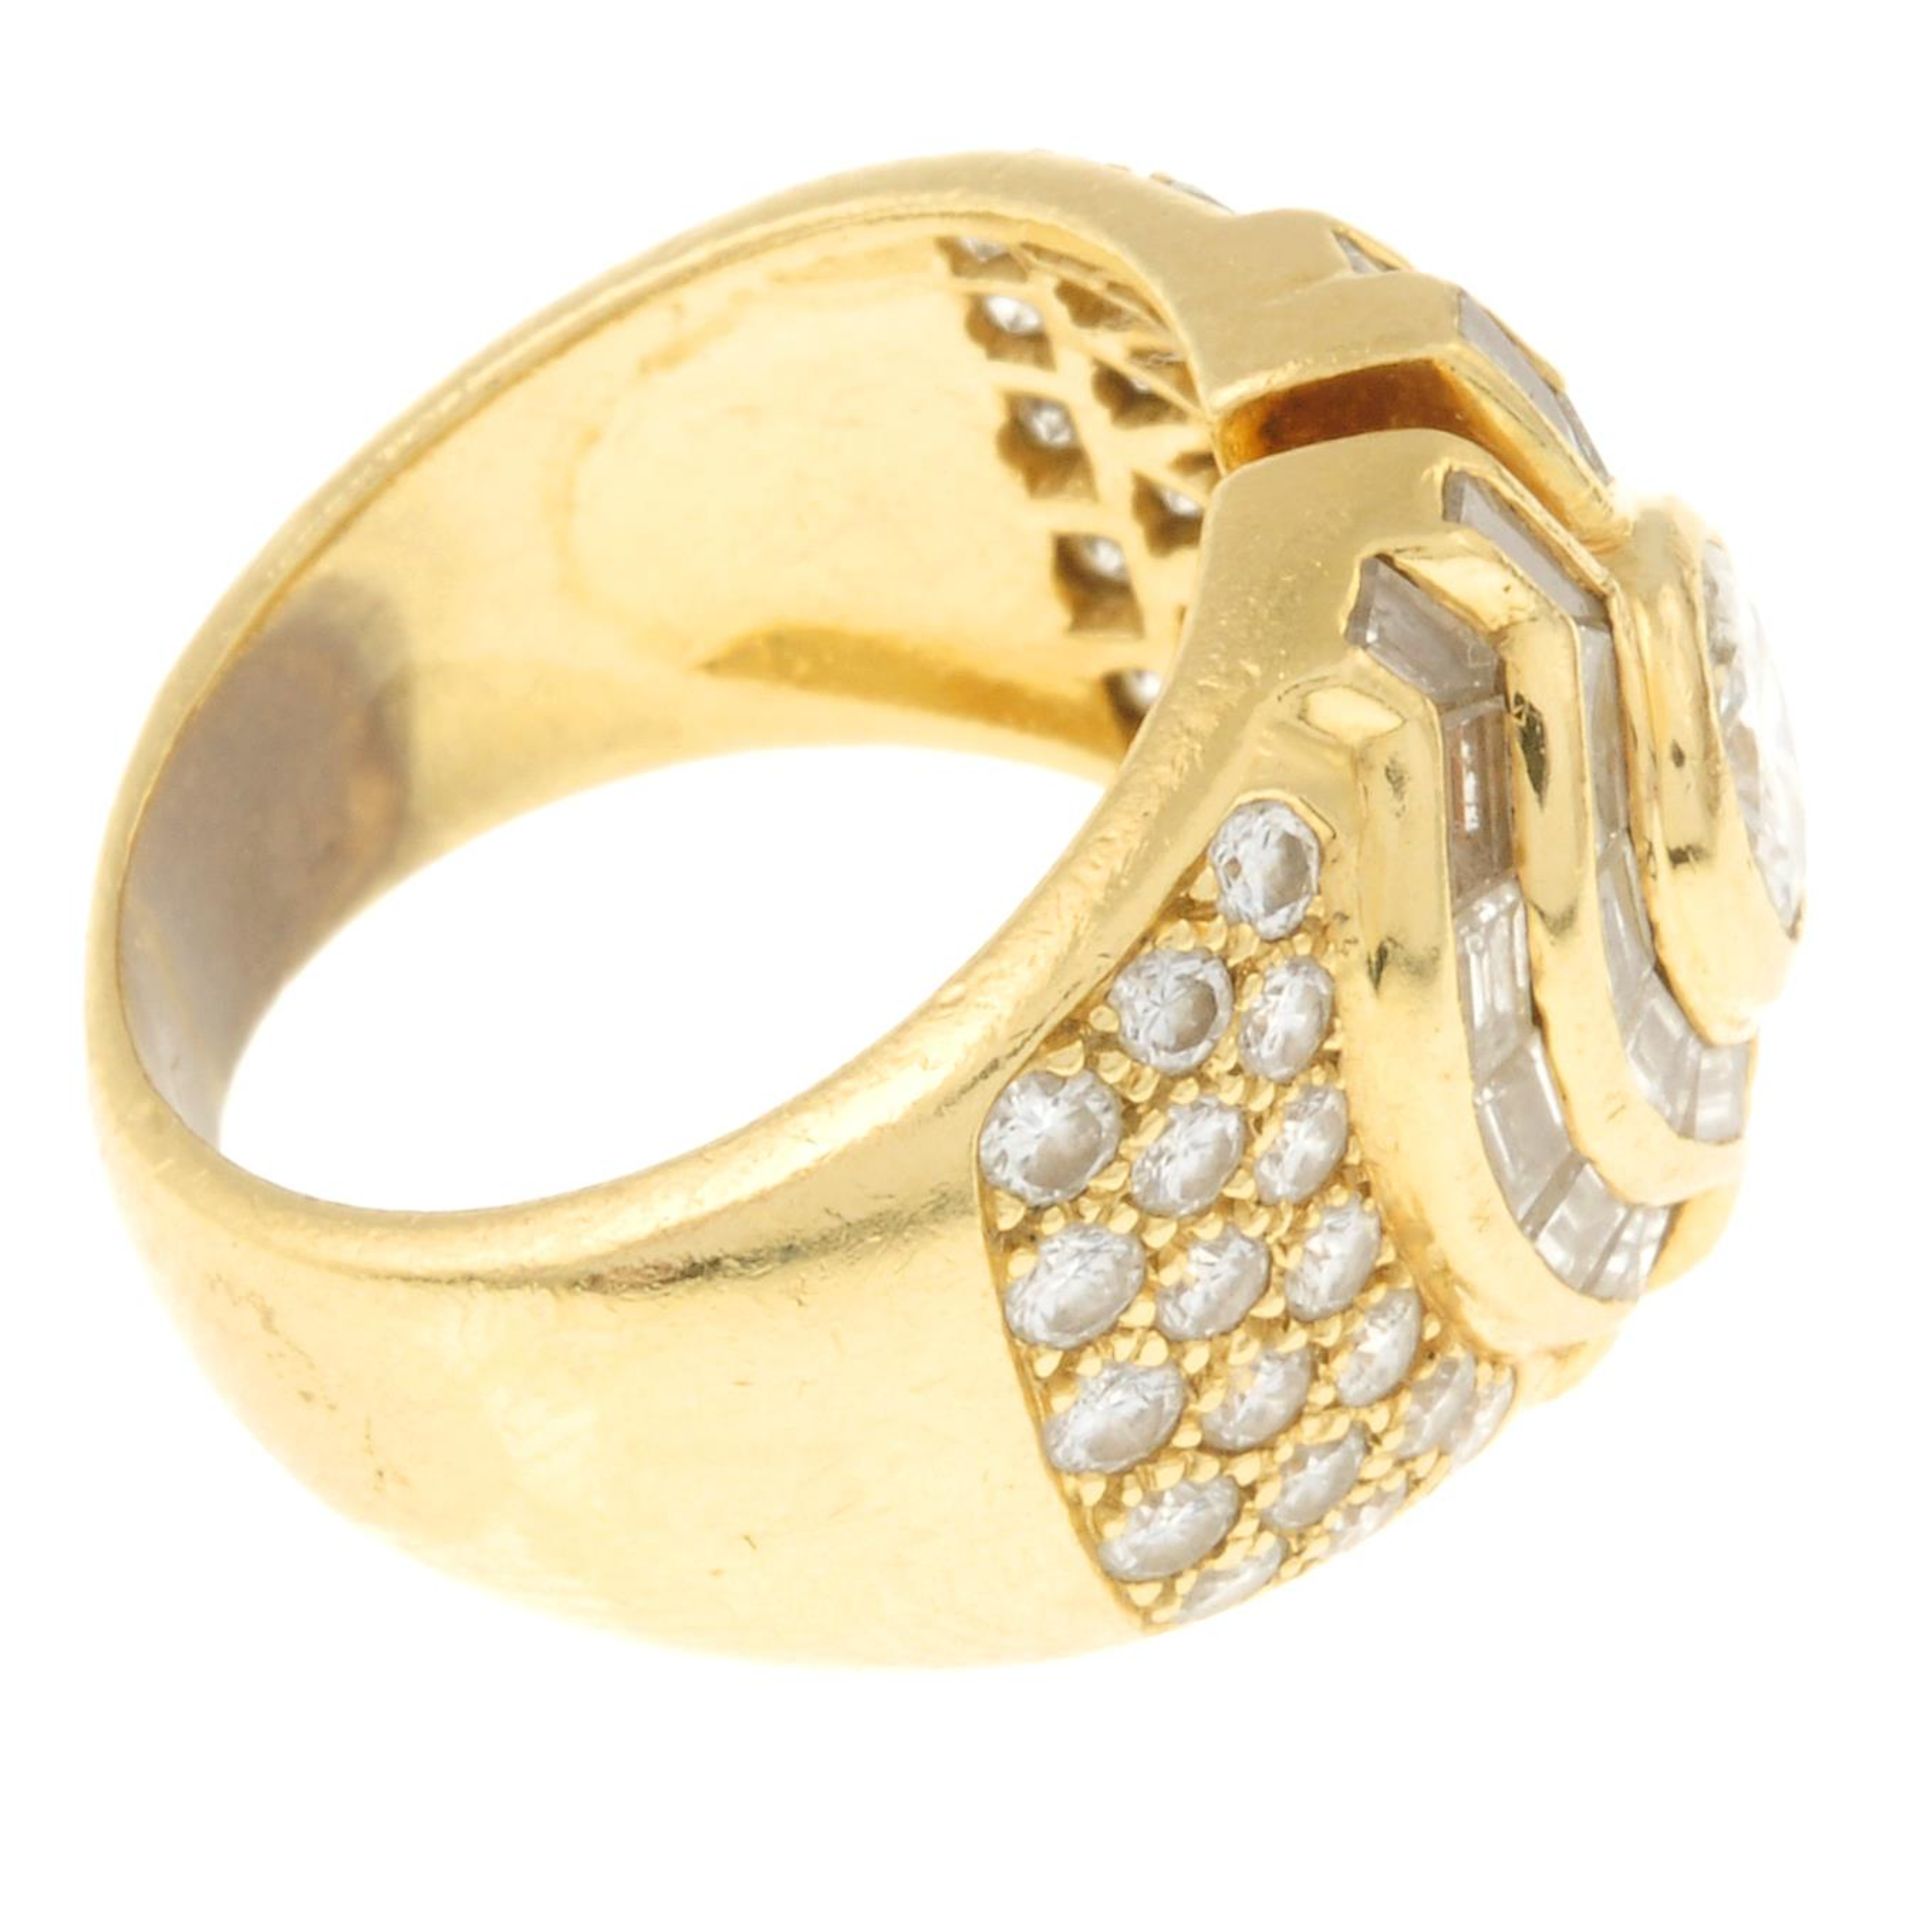 A vari-cut diamond ring. - Image 3 of 4